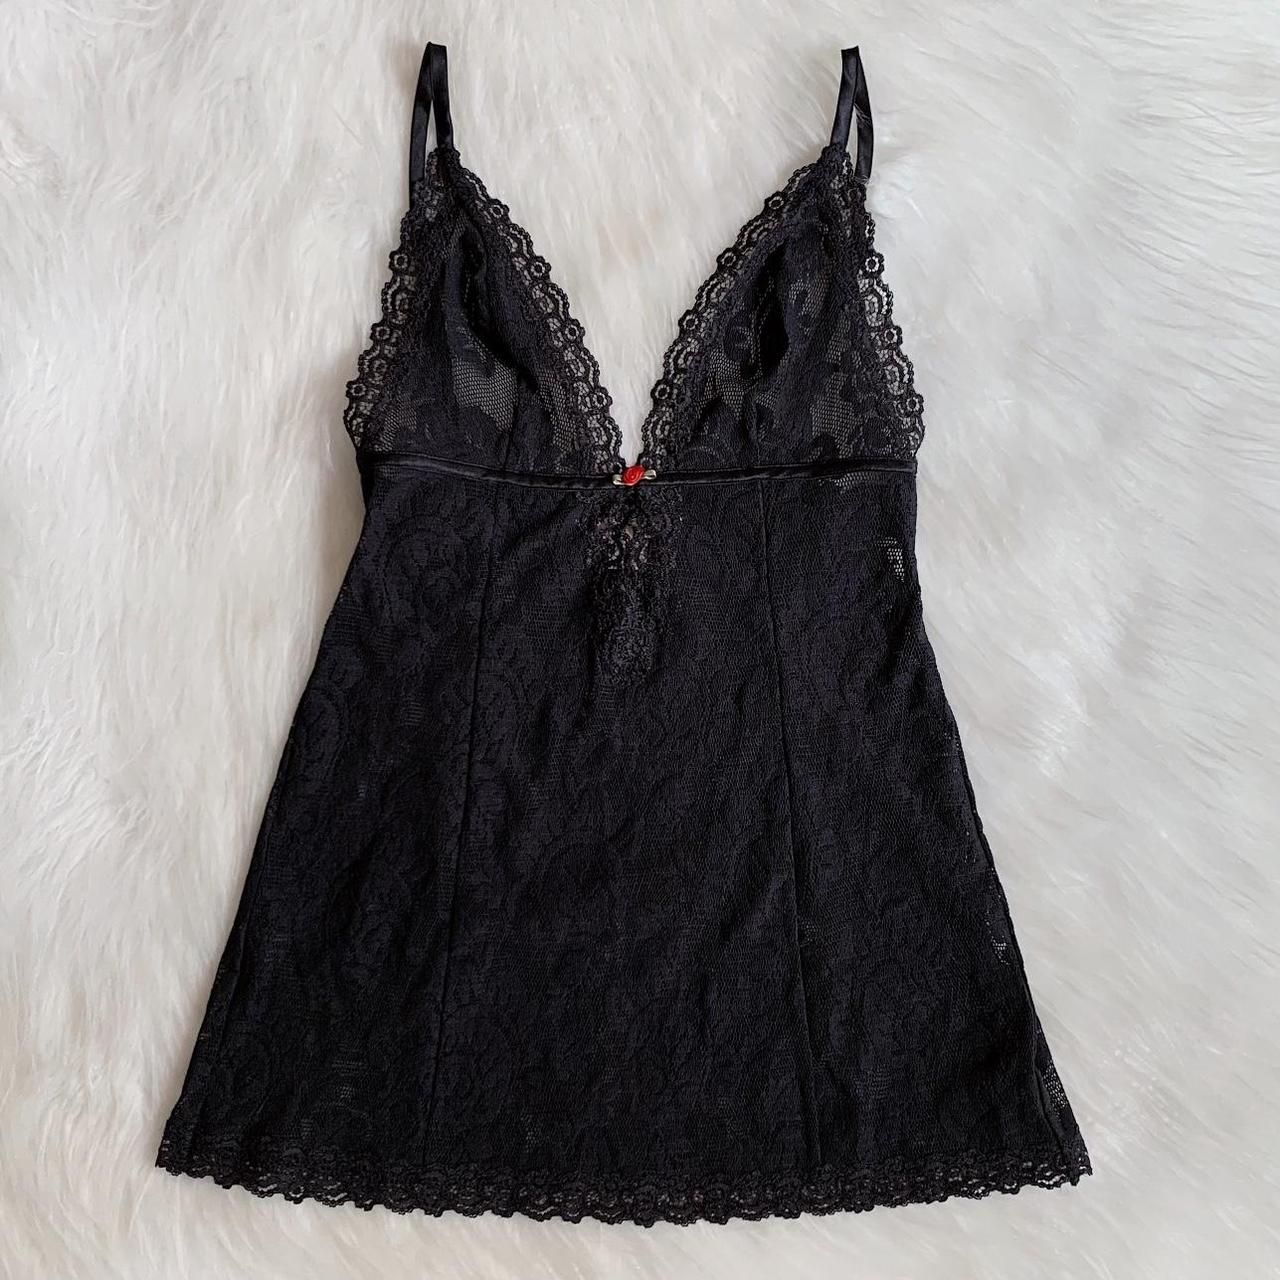 Victoria’s Secret black lace babydoll slip dress. 🌹... - Depop